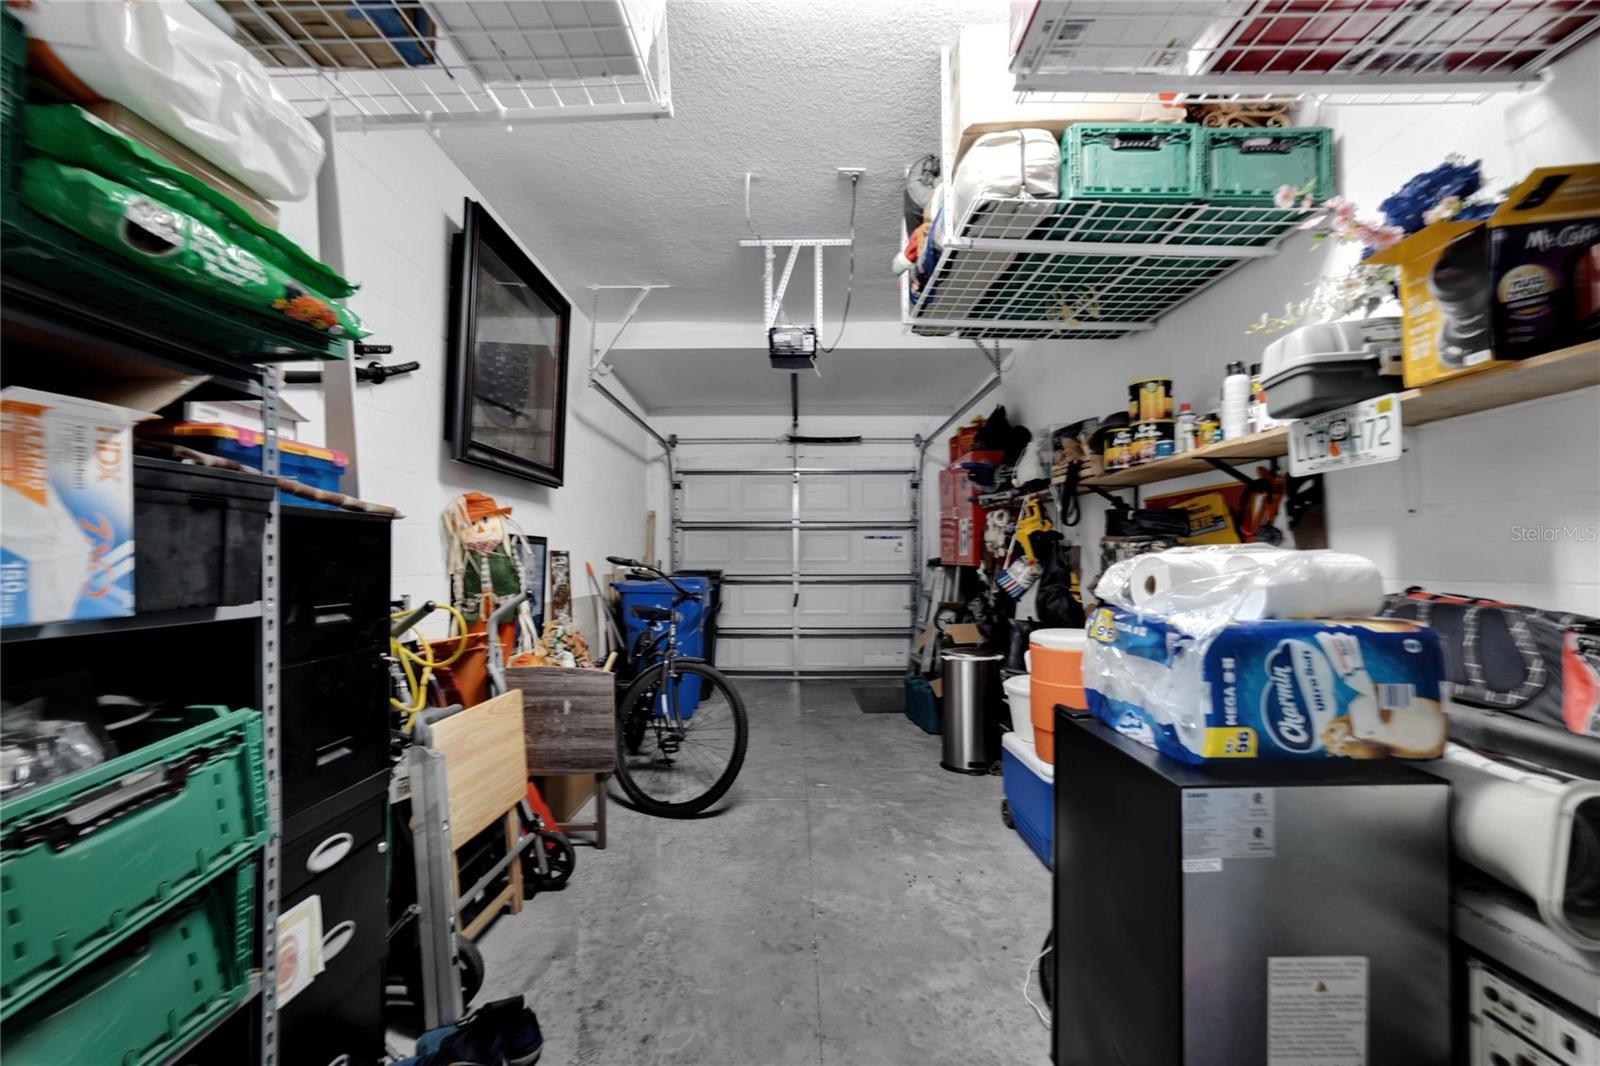 Garage racks added for extra storage